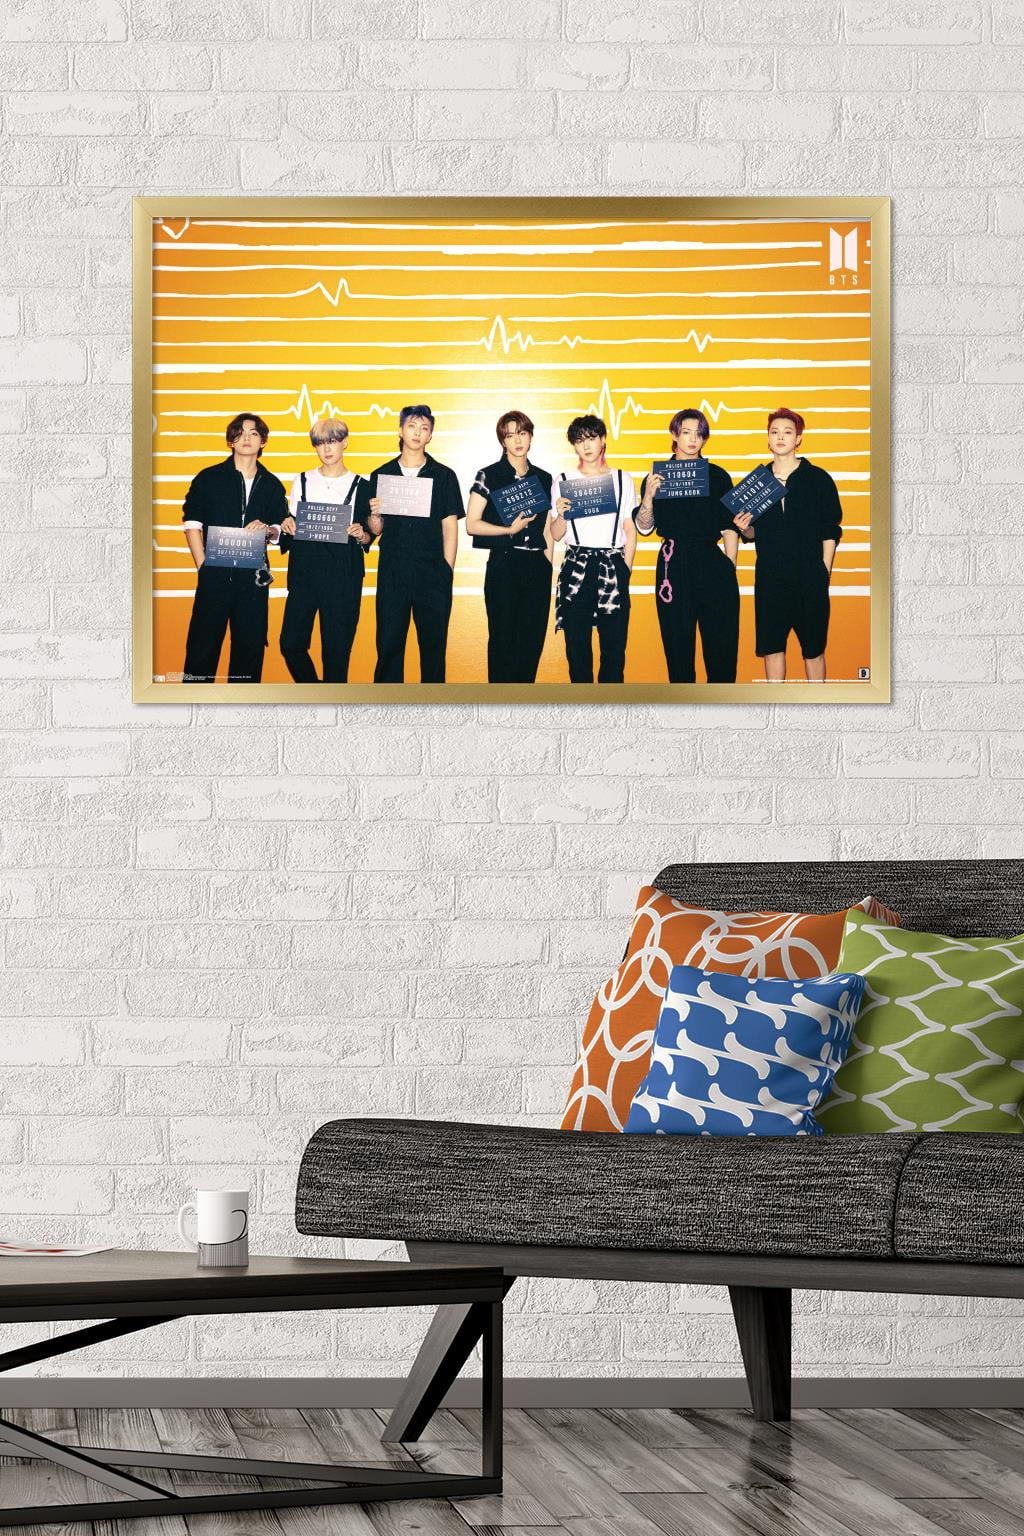 BTS - Lineup Wall Poster, 22.375